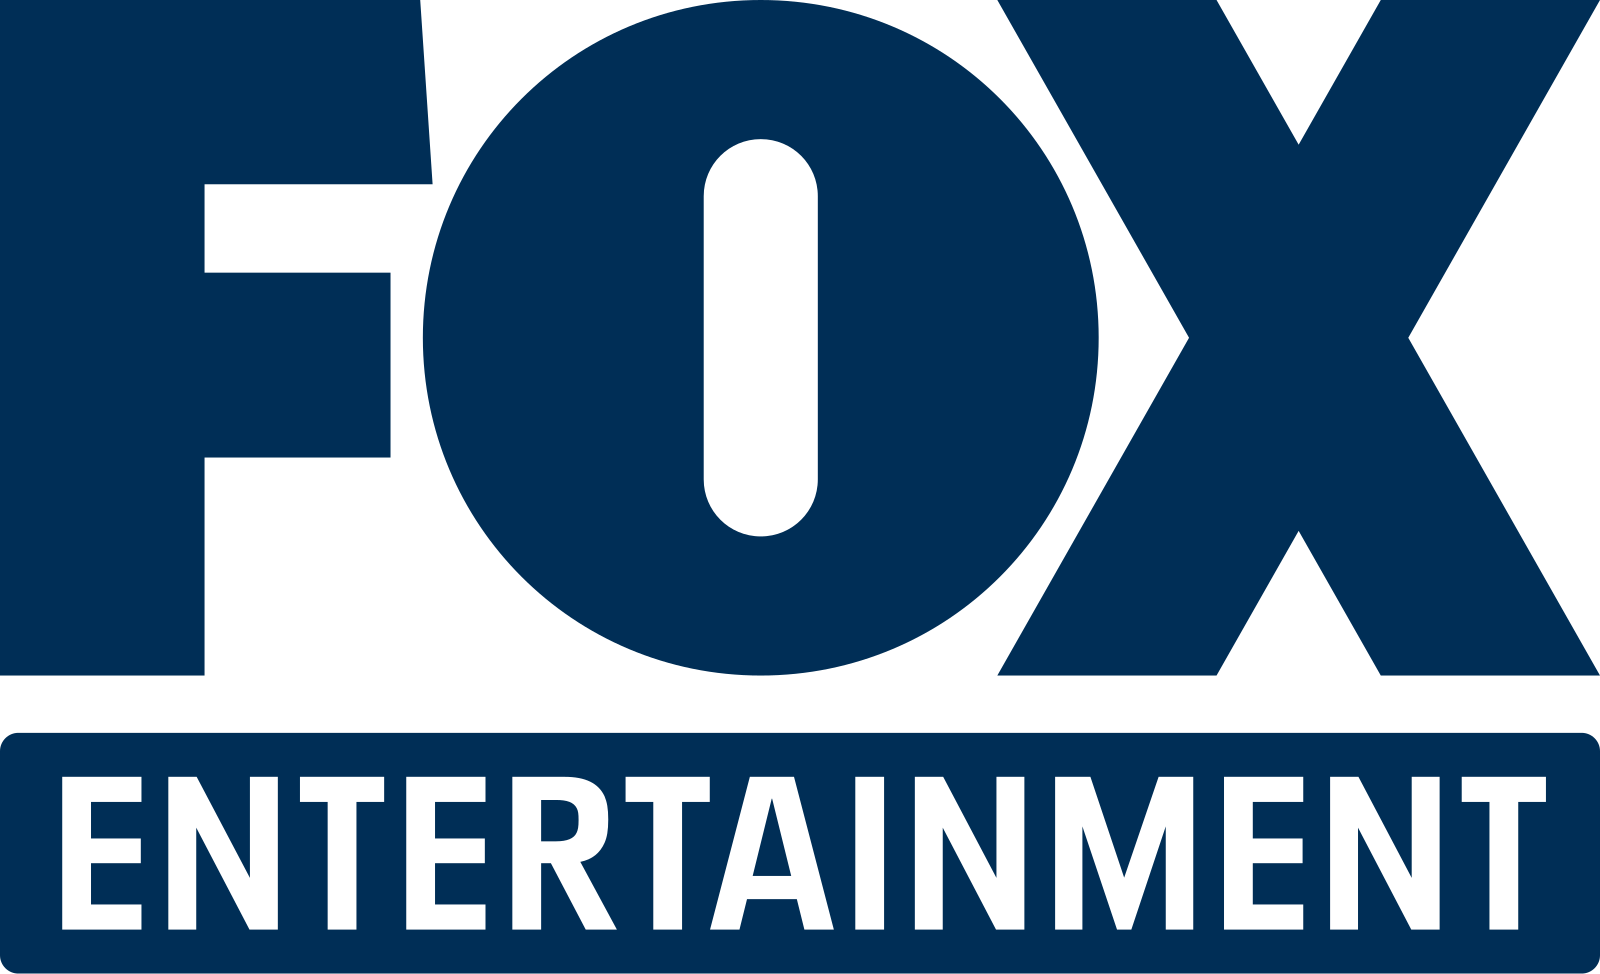 Fox entertainment. Fox Corporation. Fox Entertainment Group logo. Fox Broadcasting Company logo. Интертеймент.